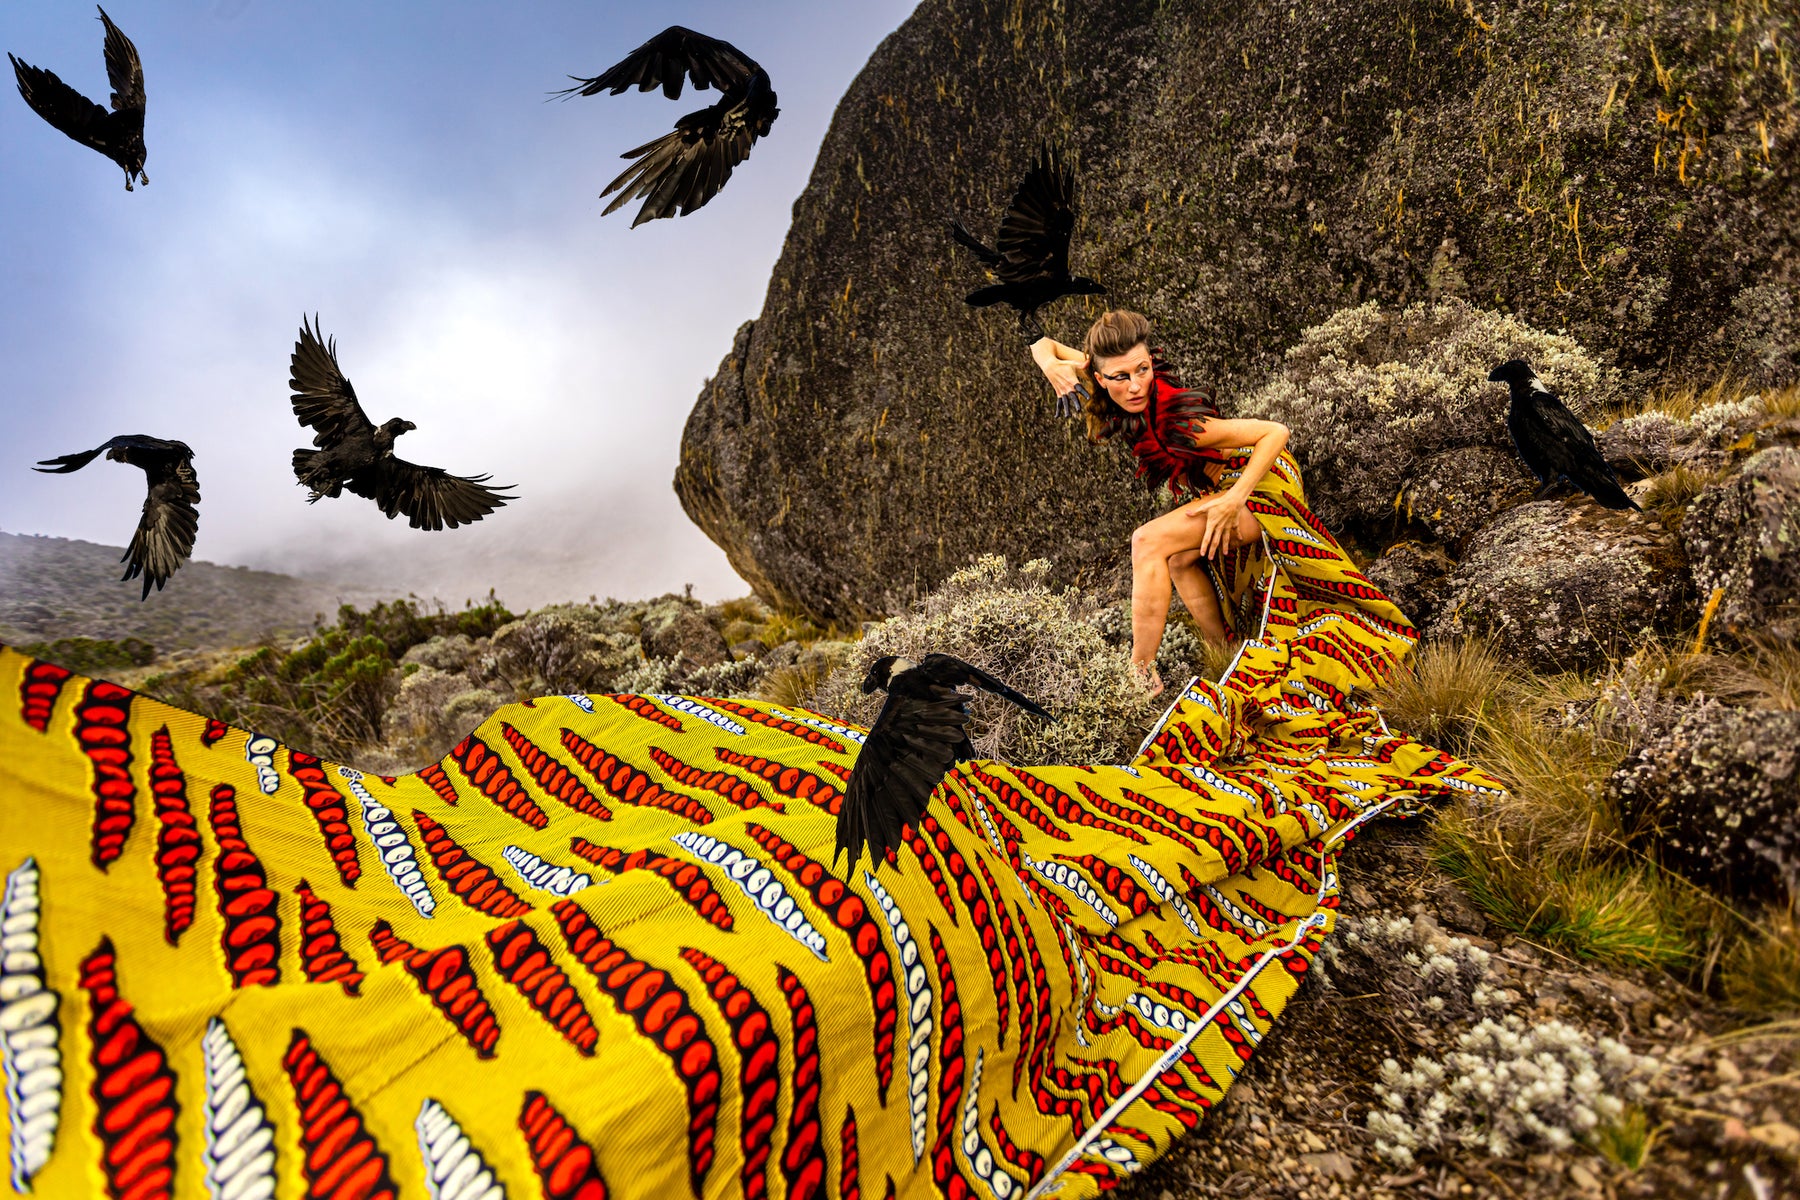 Black Crows in Mount Kilimanjaro, Tanzania - Global Goddesses